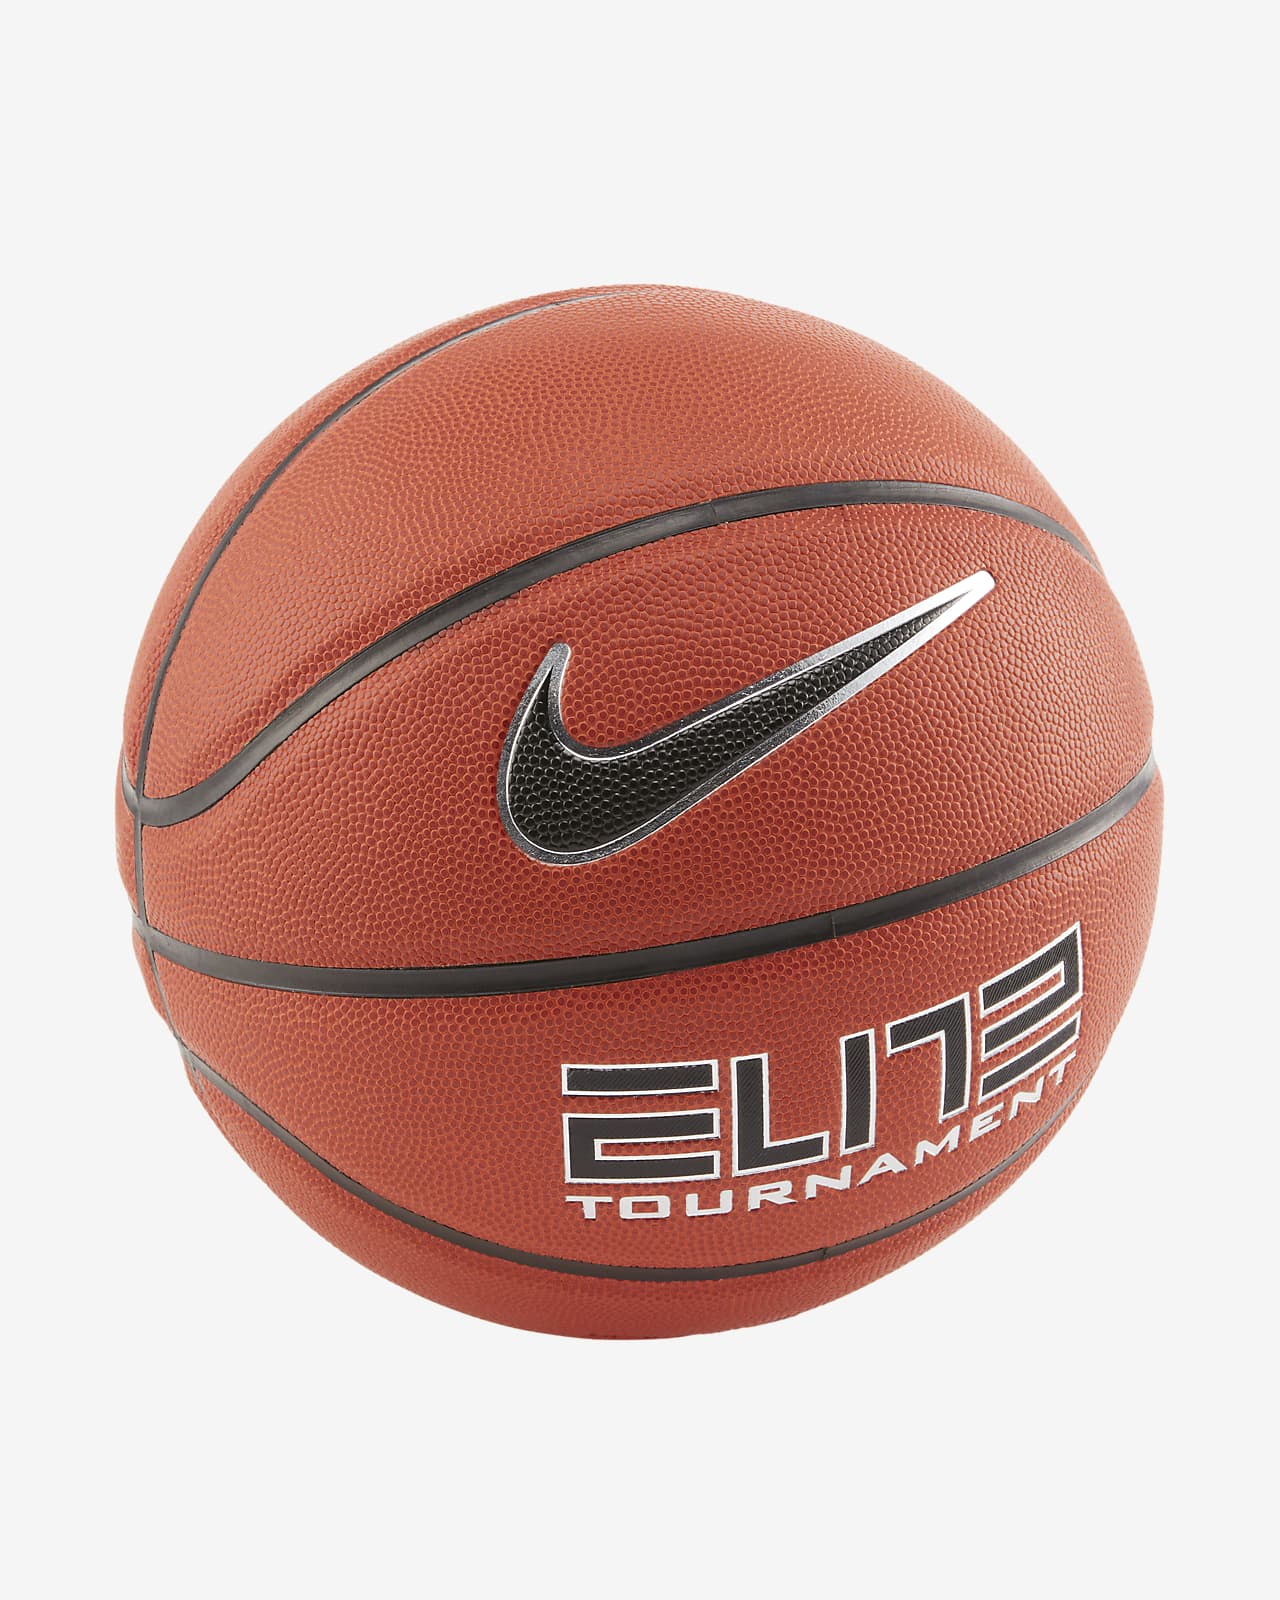 Ballon de basketball Nike Elite Tournament (tailles 6 et 7)